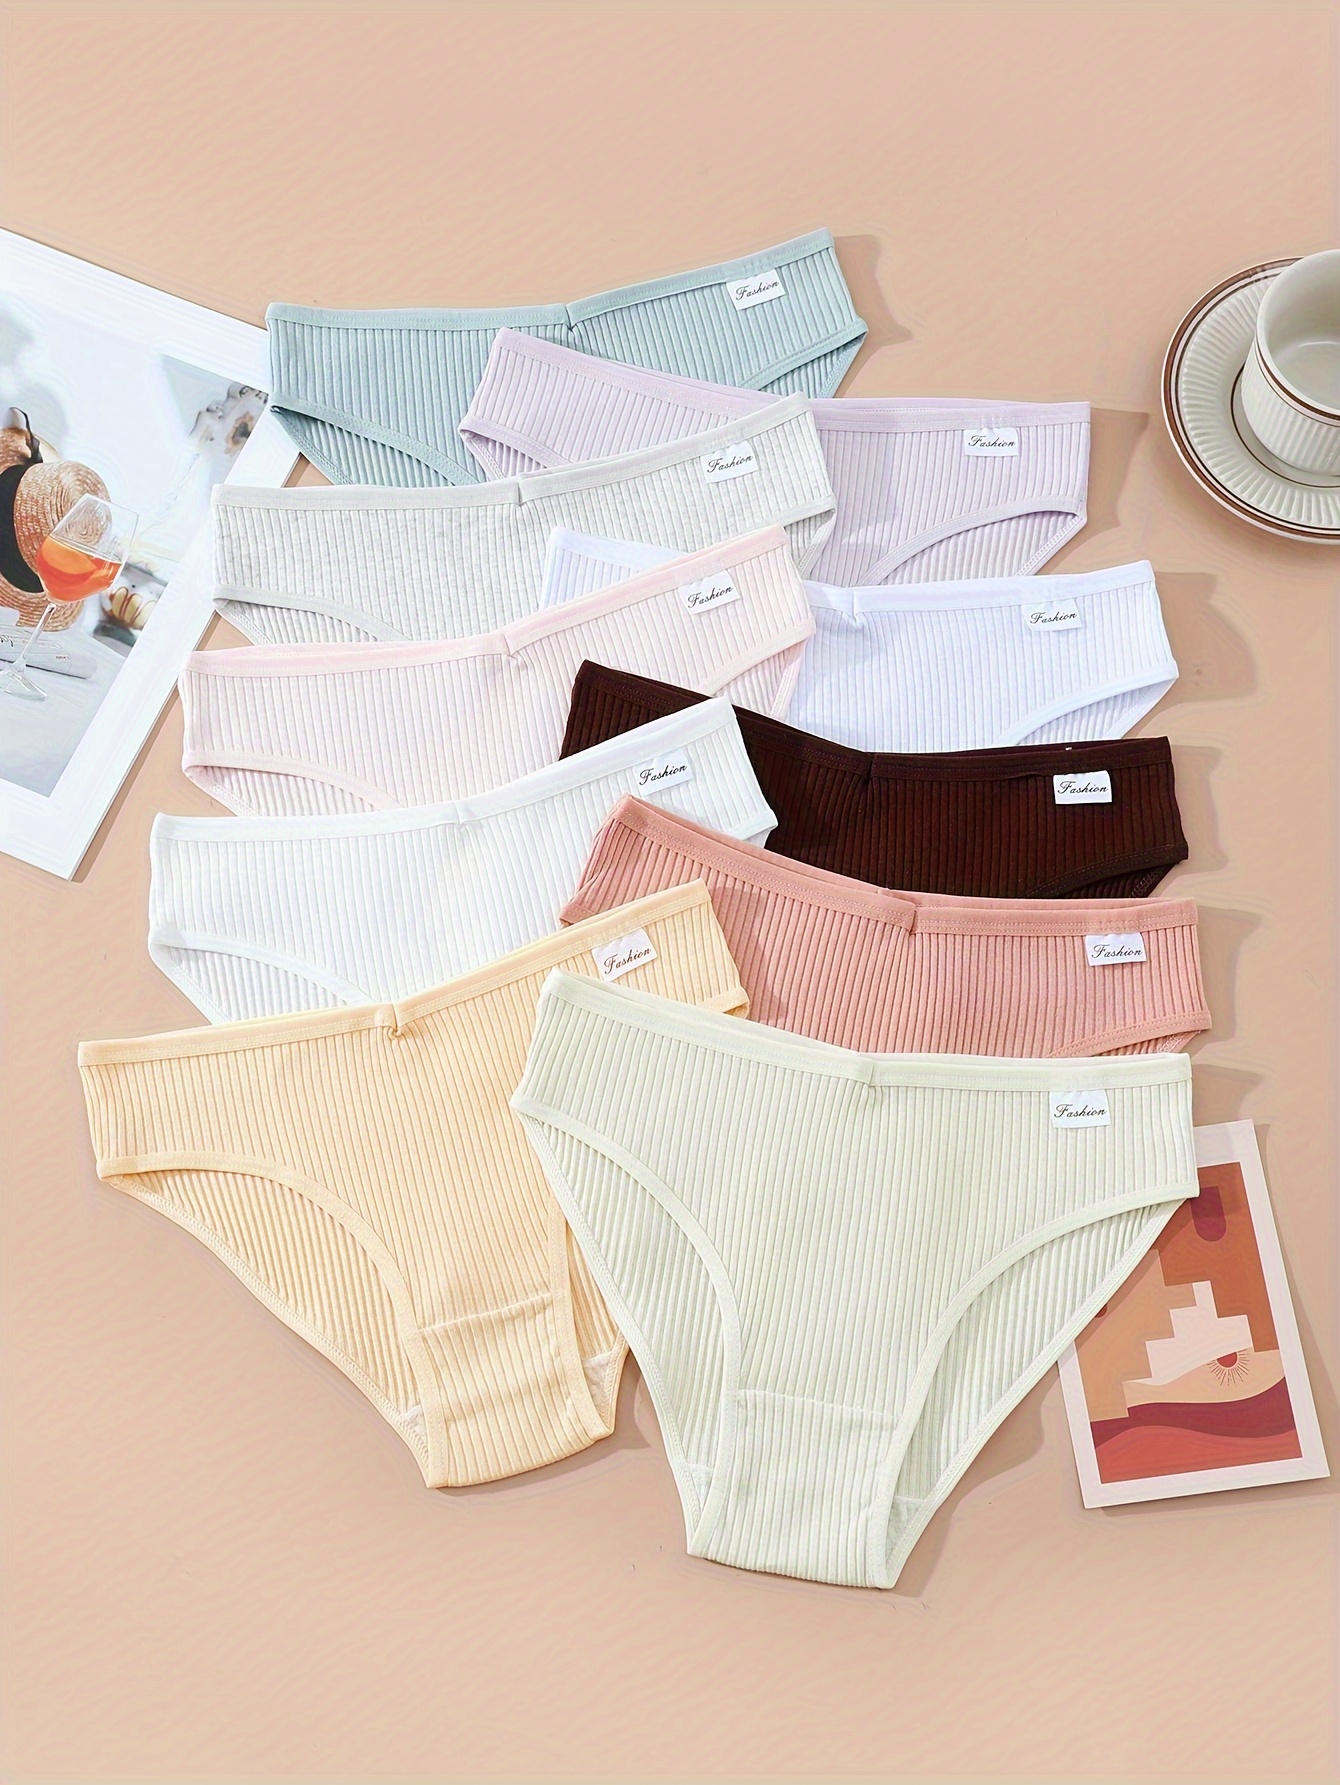 Sizi (Packof10) Unisex Disposable 100% Cotton White Underwear, Travel  Panties for Men Women Unisex Use